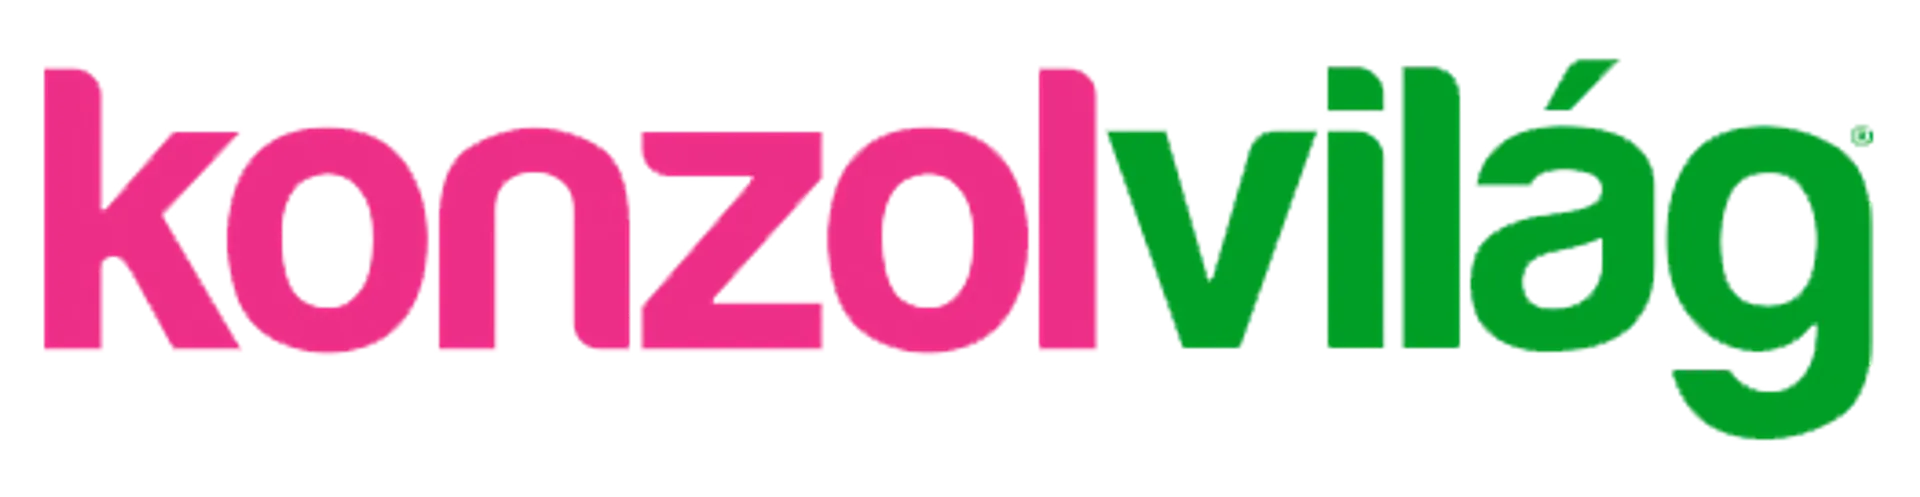 KONZOLVILÁG logo